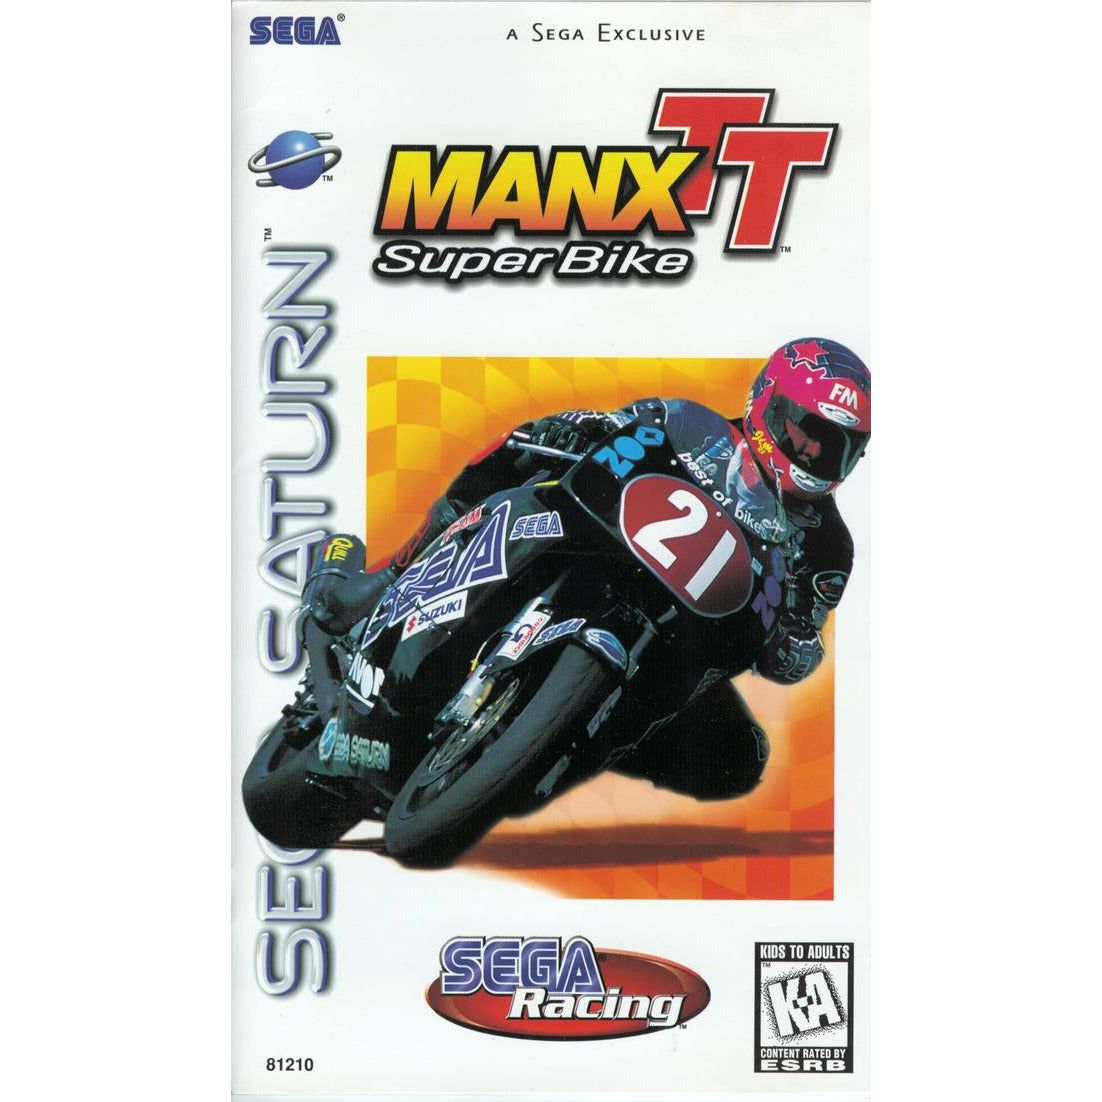 SATURN - MANX TT Superbike (Printed Cover Art) (No Manual)